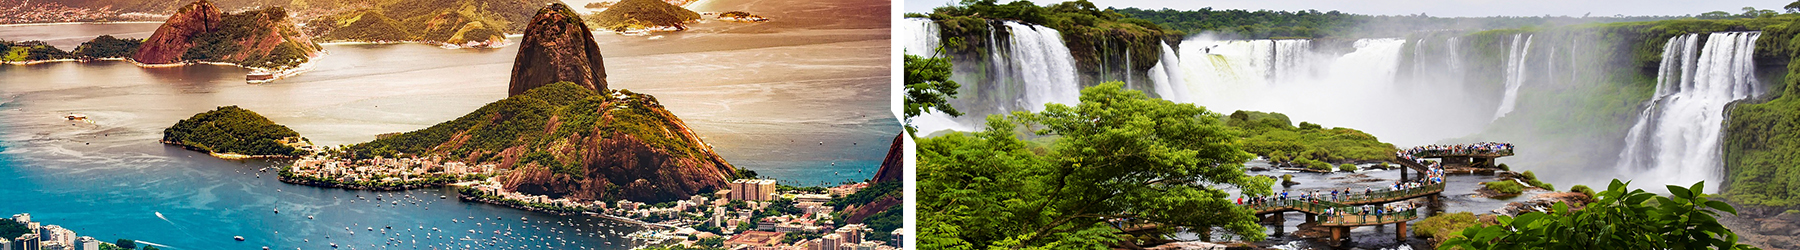 Argentina & Brazil with Iguazu Falls - 10 Nights